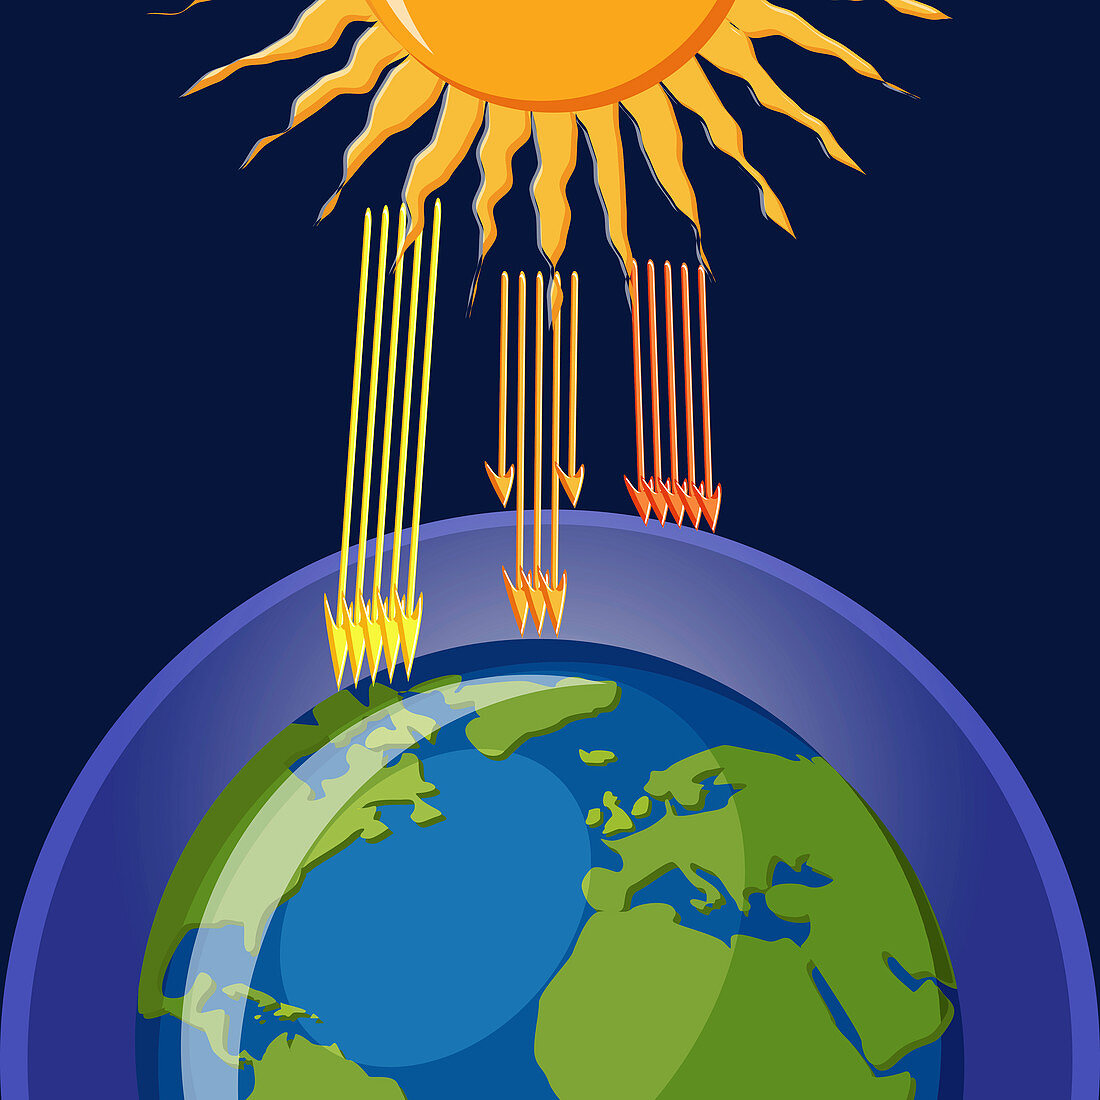 Ozone layer protection from UV radiation, illustration